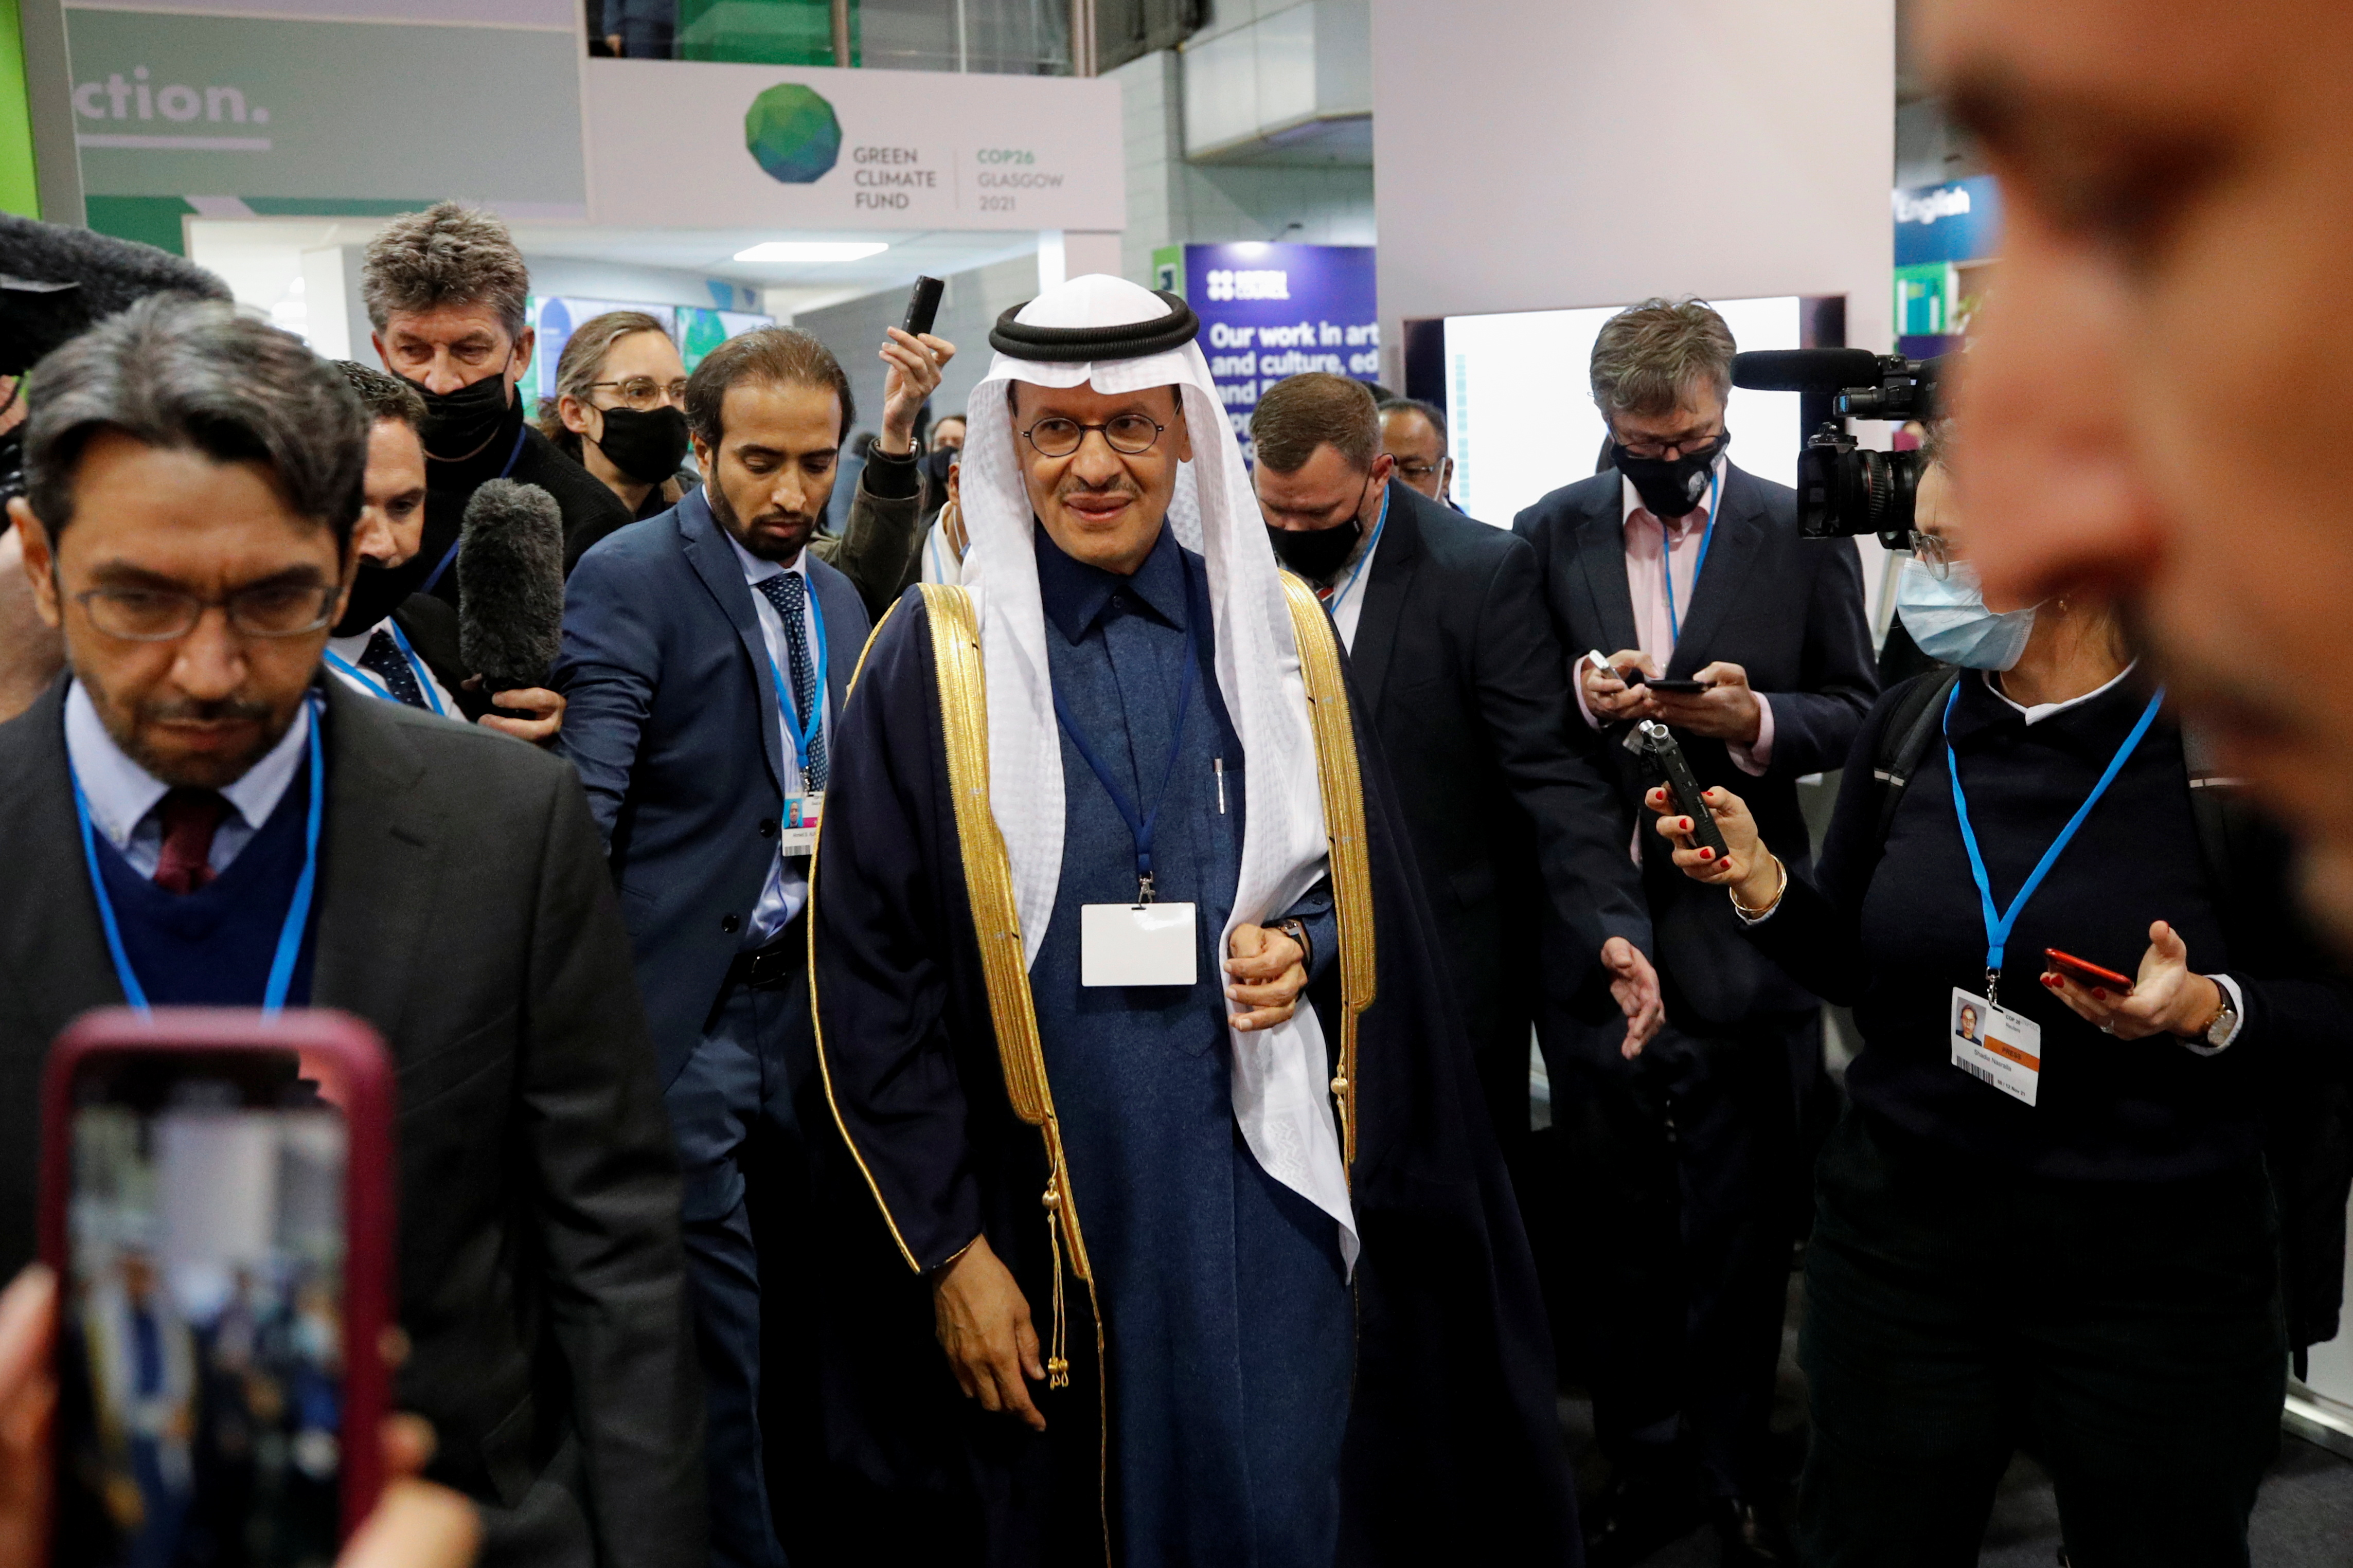 Saudi Energy Minister, Prince Abdulaziz bin Salman bin Abdulaziz Al Saud is surrounded by media during the UN Climate Change Conference (COP26) in Glasgow, Scotland, Britain, November 10, 2021. REUTERS/Phil Noble